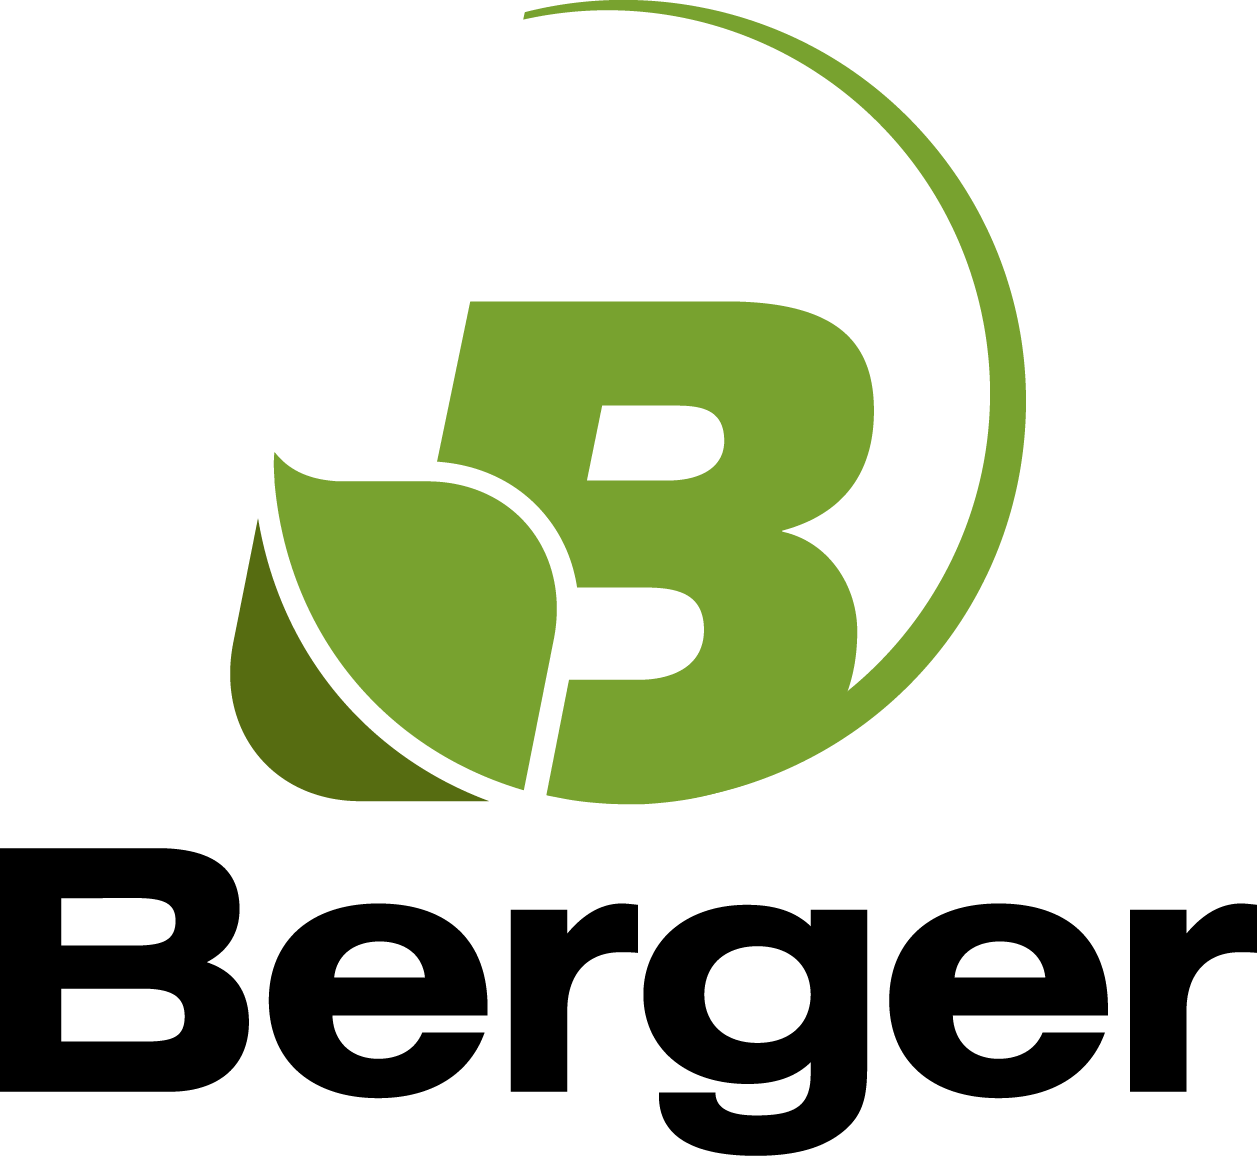 Berger Logo - Berger. High Quality Growing Media